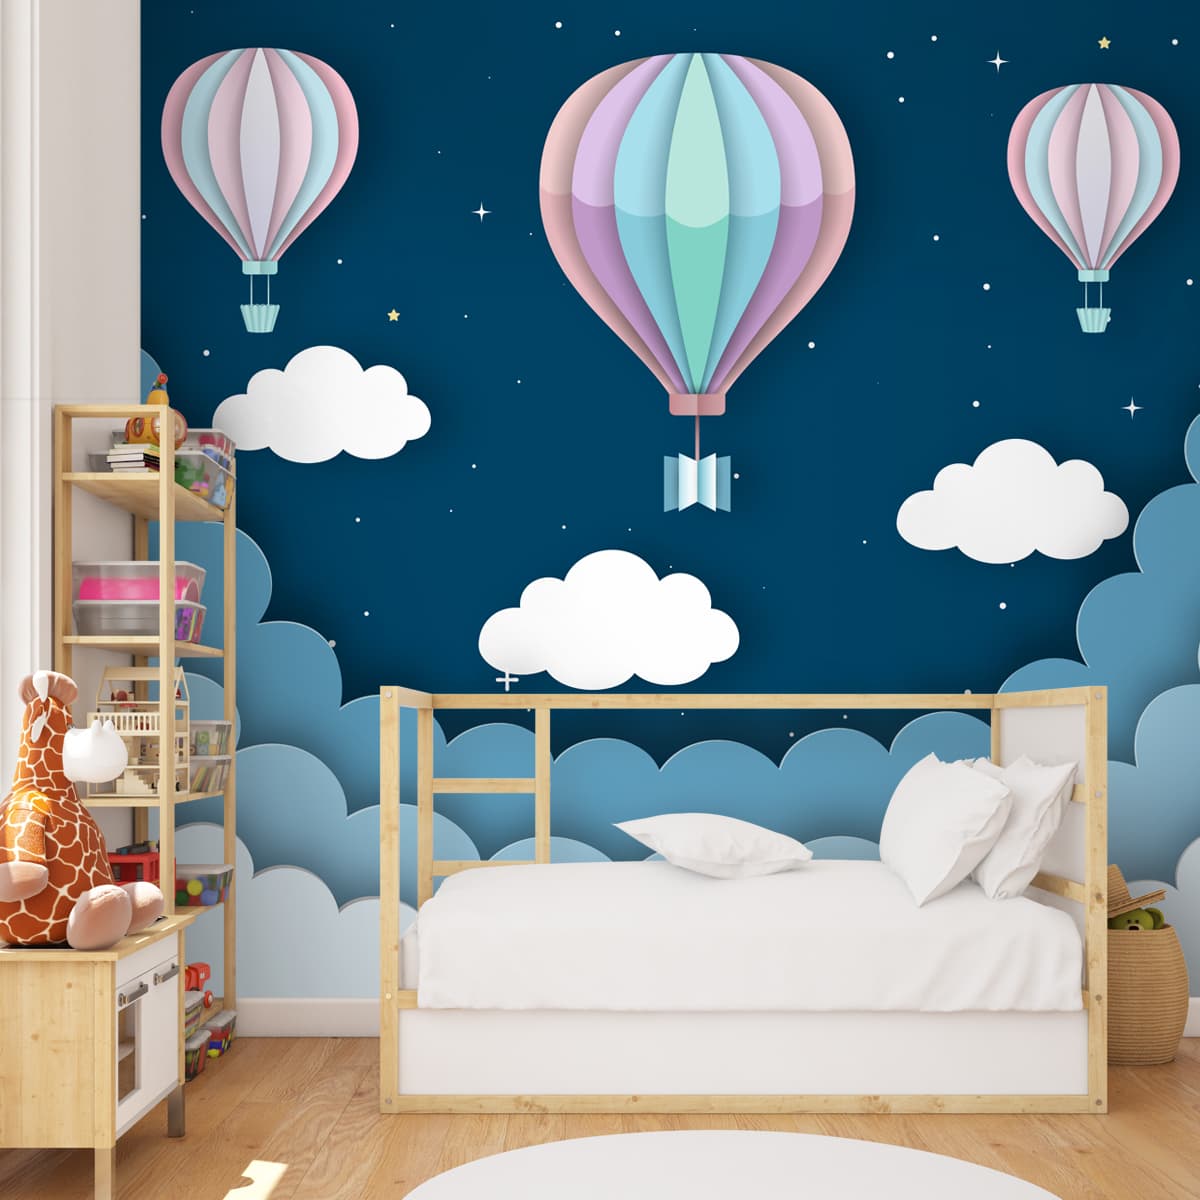 3D Hot Air Wallpaper for Kids Room , Customised